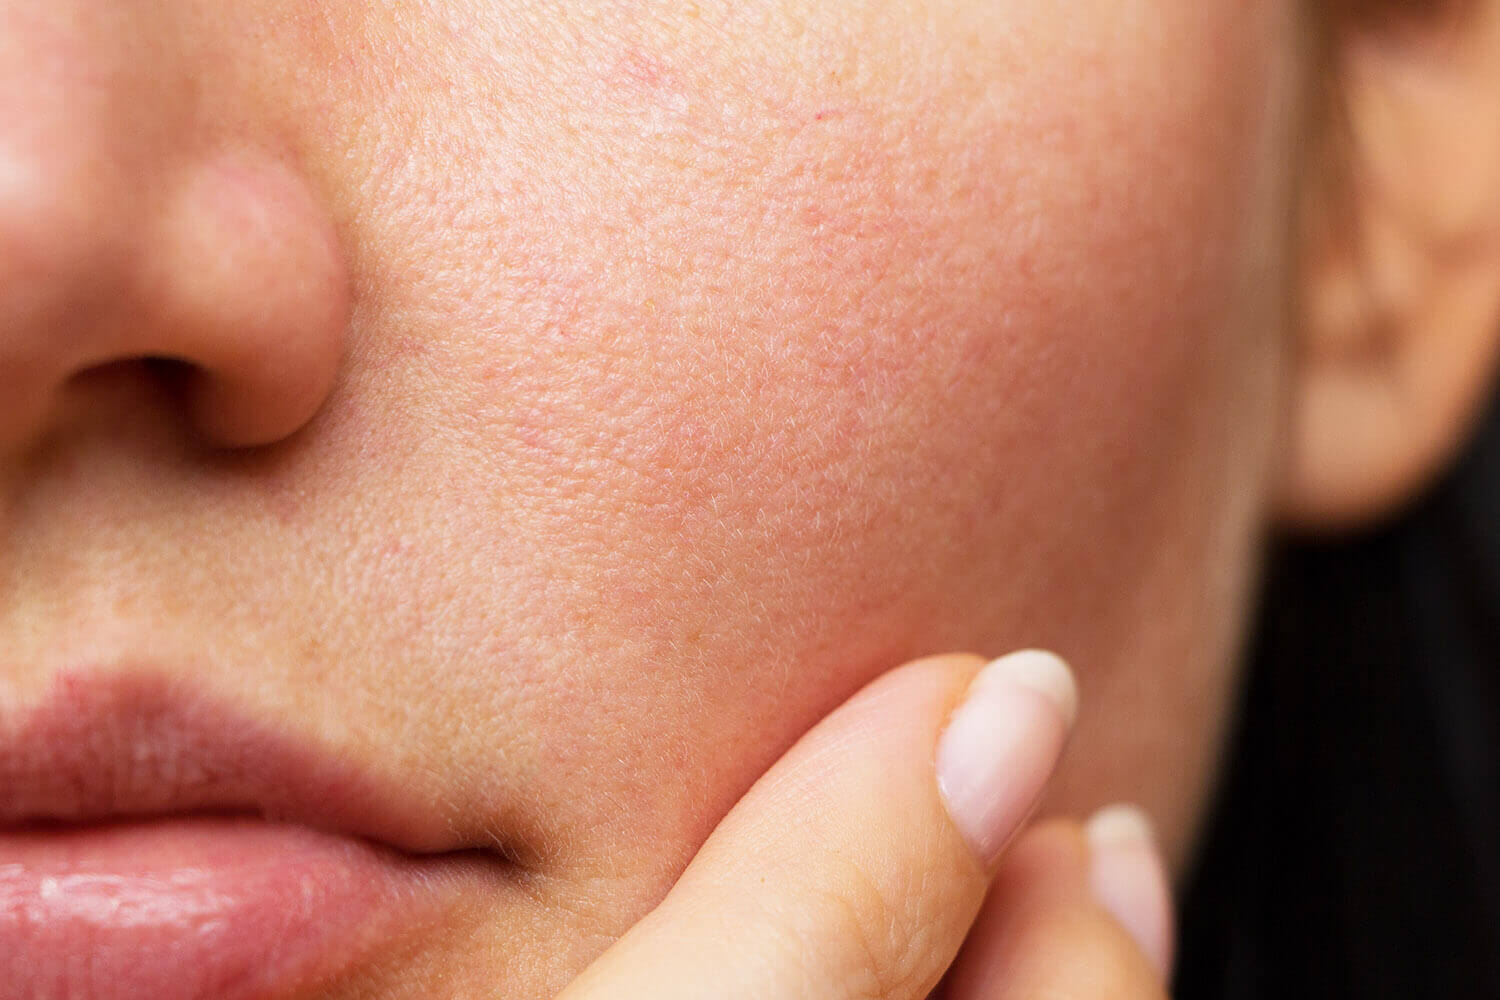 How to make your pores smaller